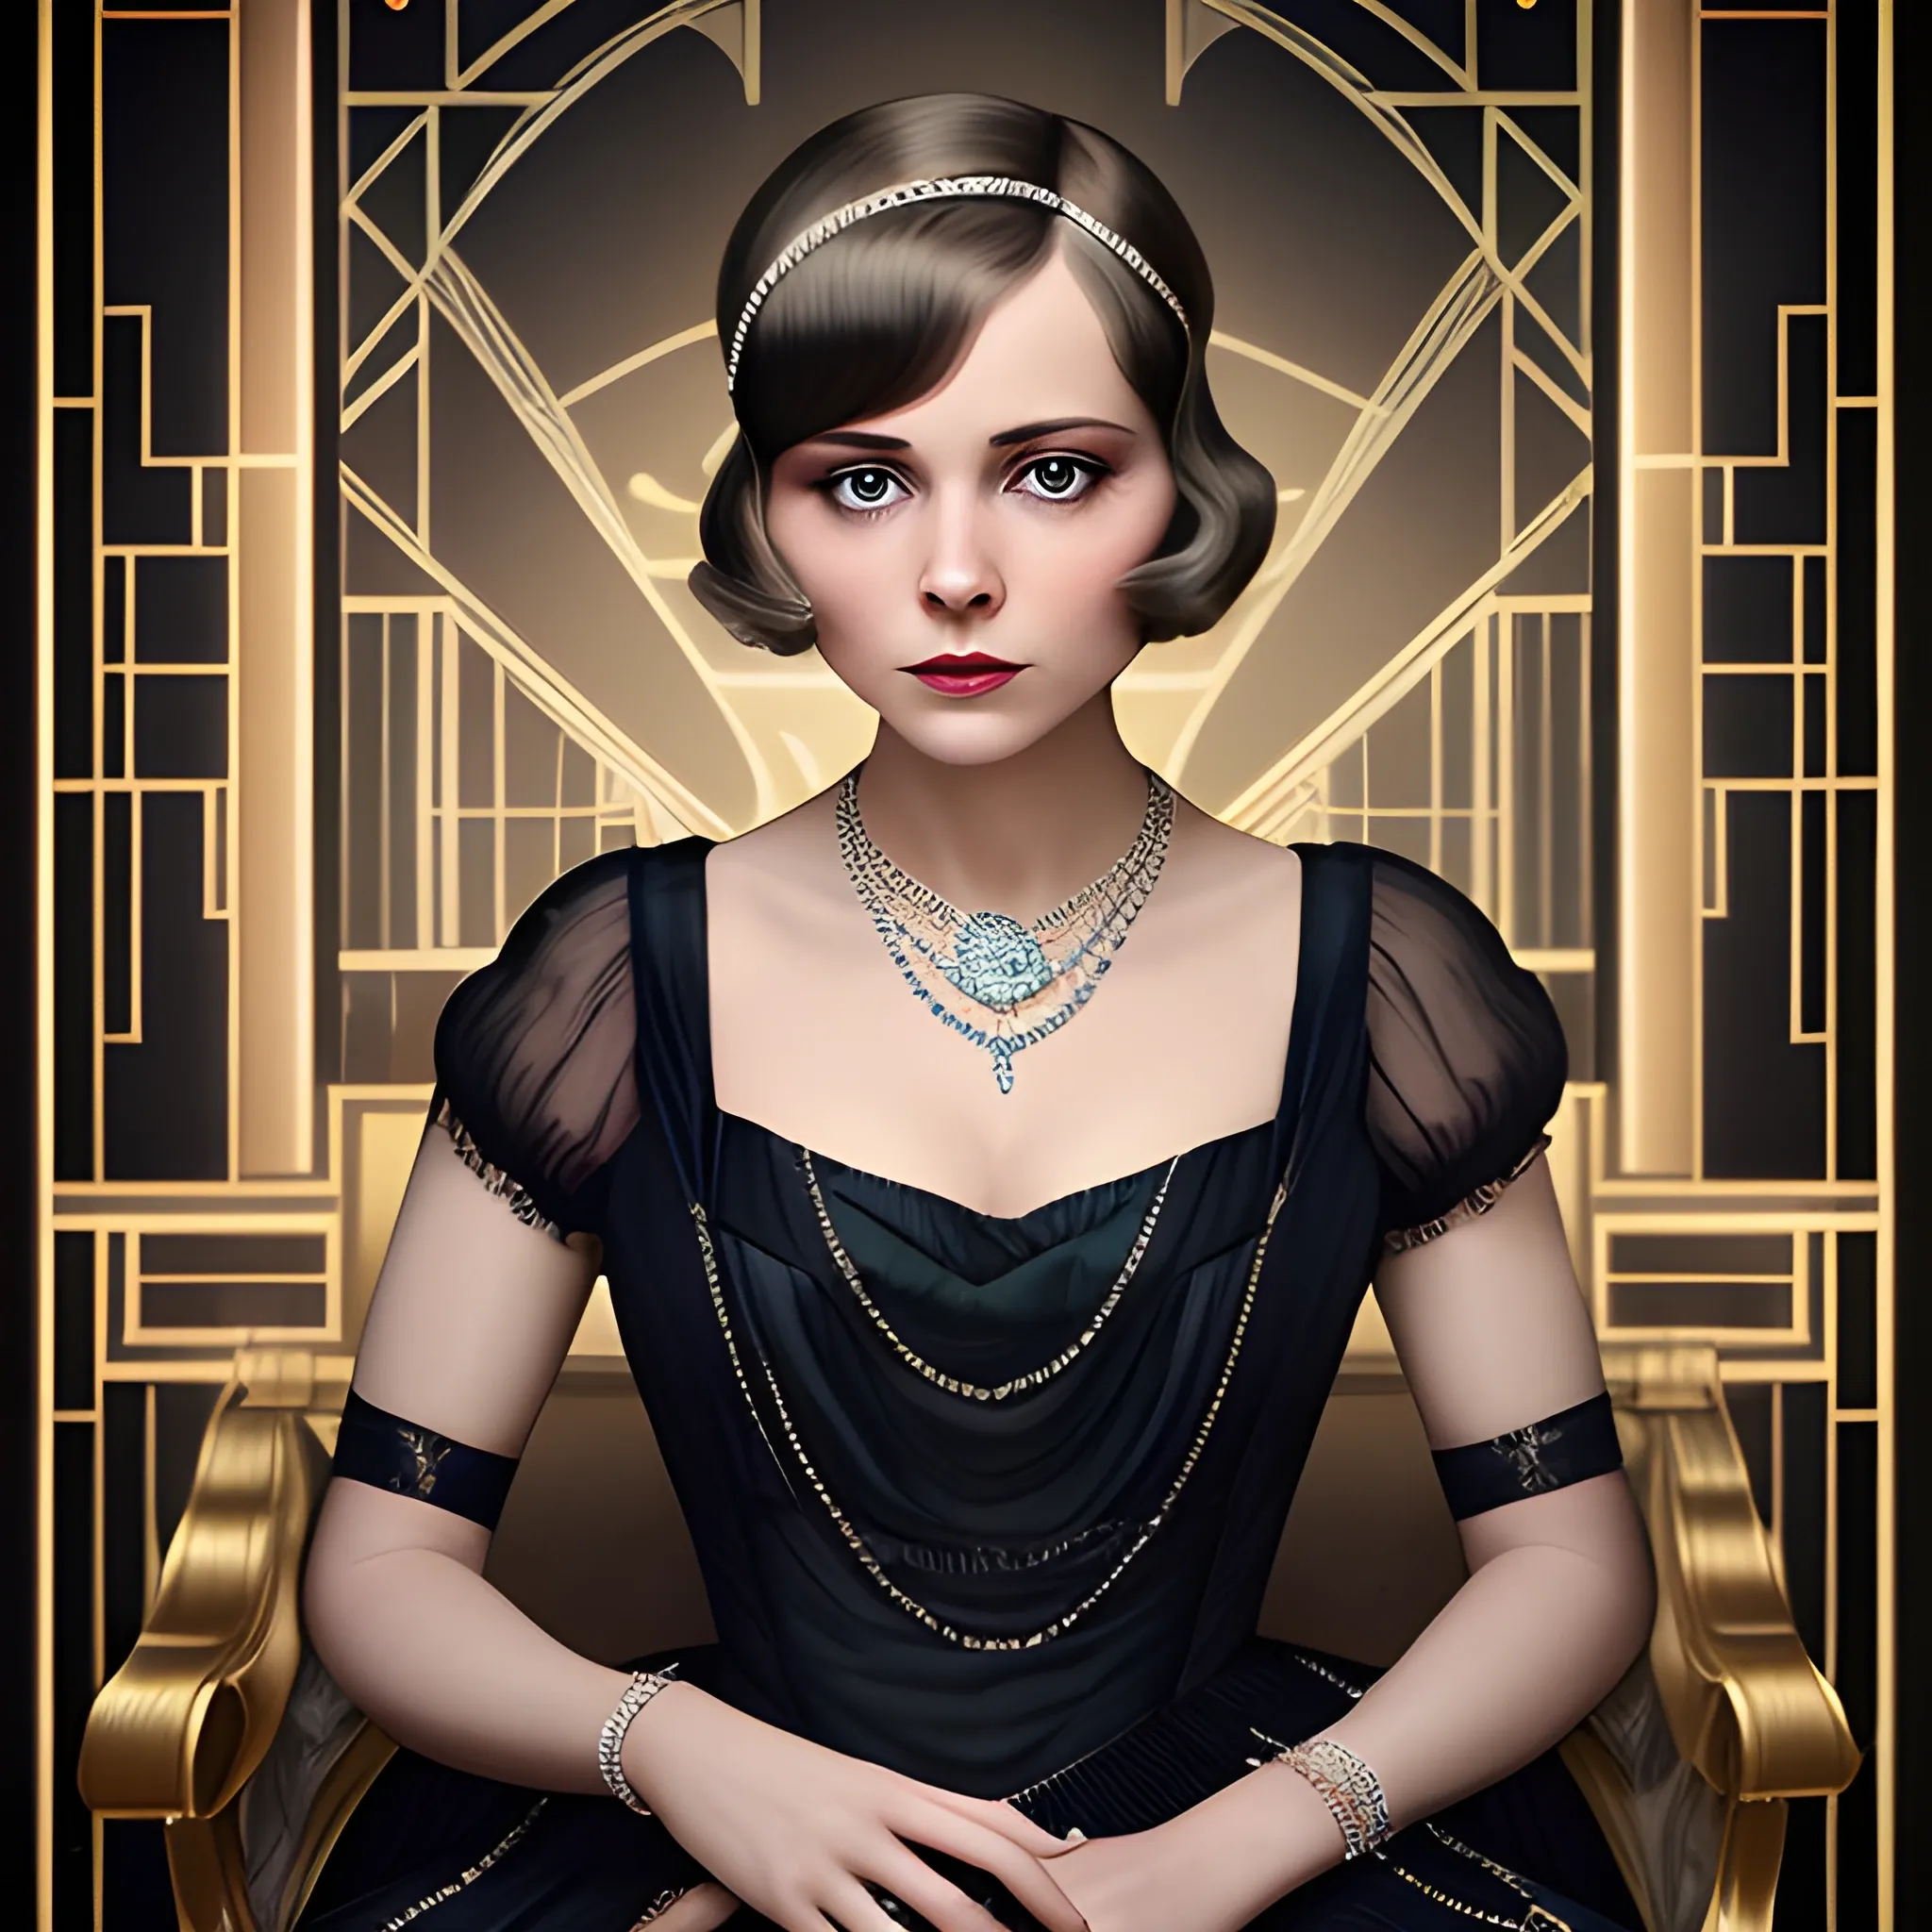 8k, Masterpiece, beautiful lady looking, in period costume, in the style of the Great Gatsby, studio Dark light, rim light, stunningly beautiful, matte, award-winning, cinematic quality, photorealism